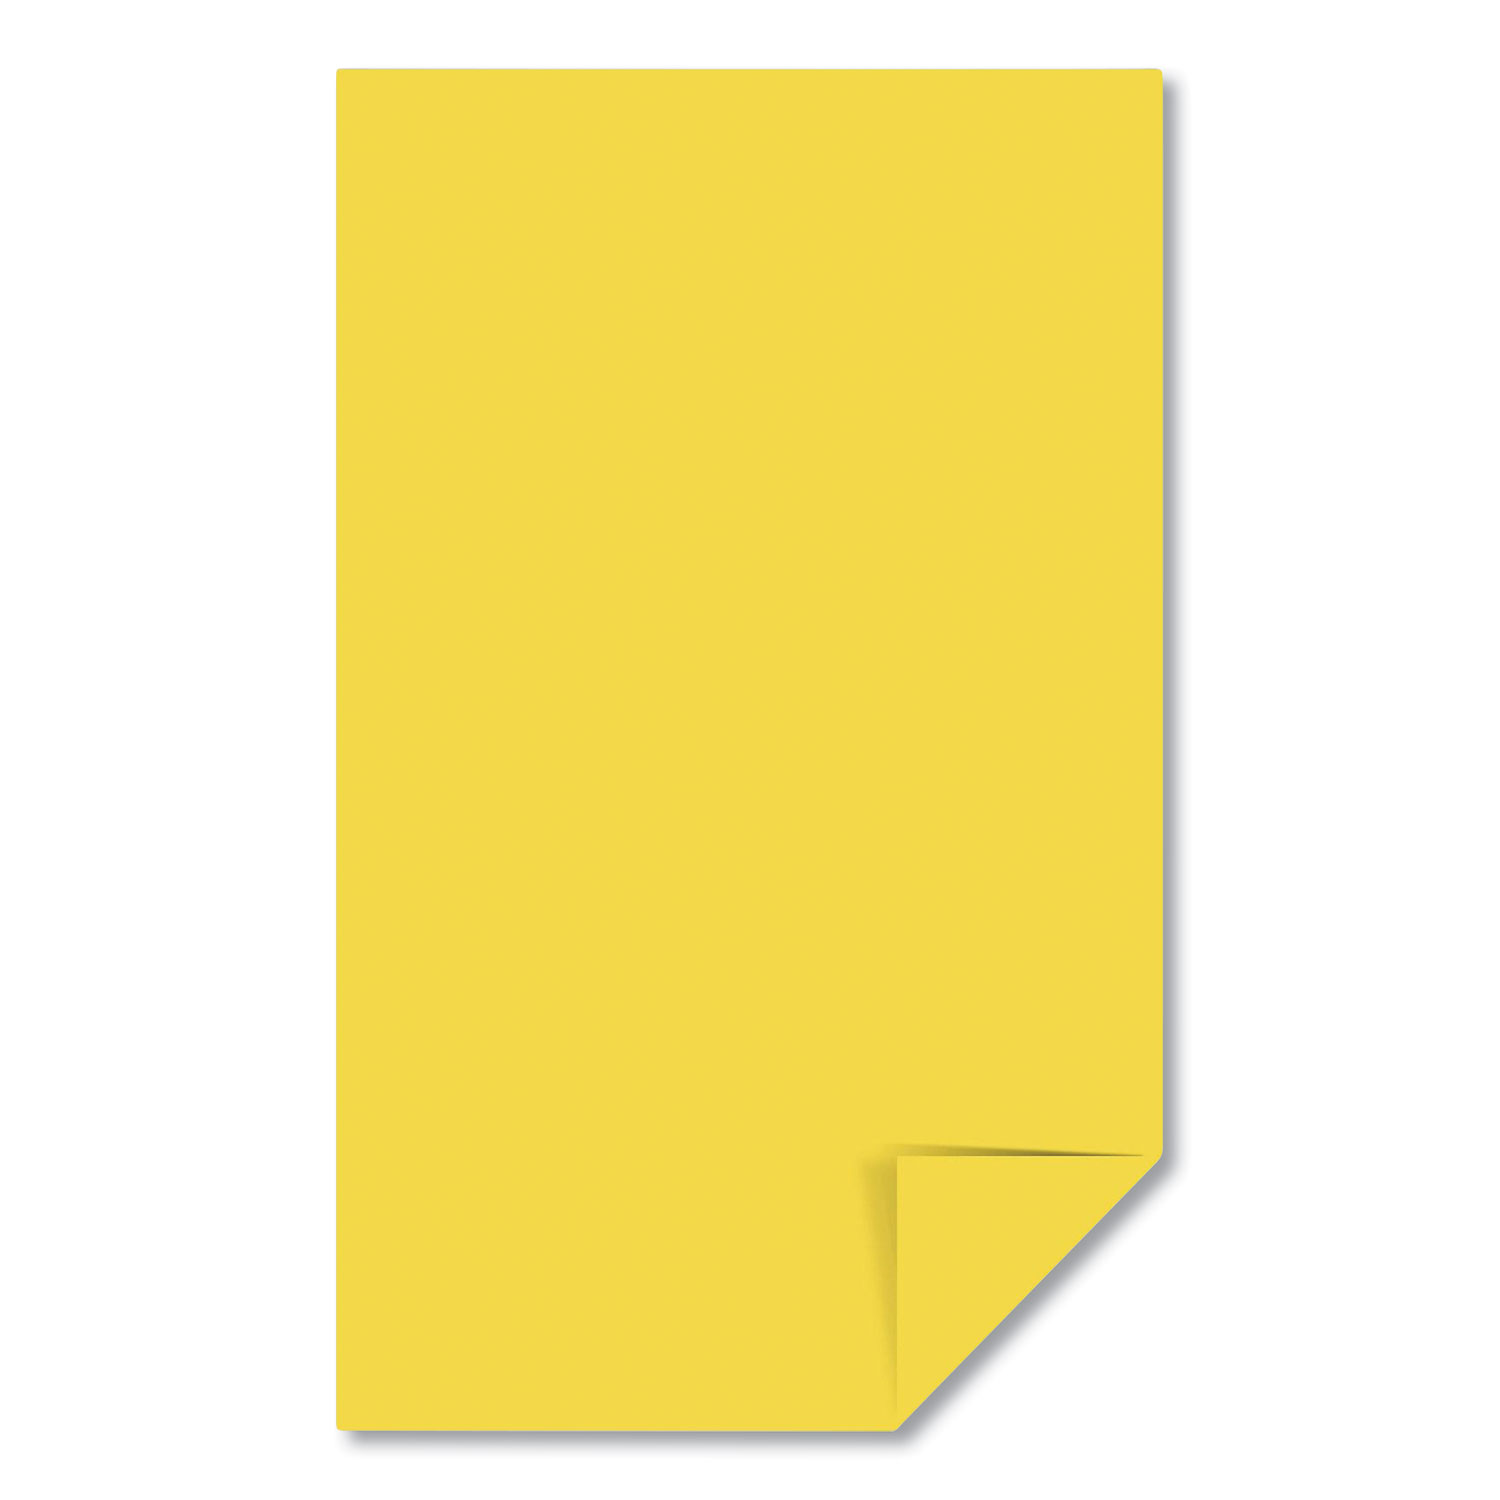  Astrobrights 22532 Color Paper, 24 lb, 8.5 x 14, Solar Yellow, 500/Ream (WAU495467) 